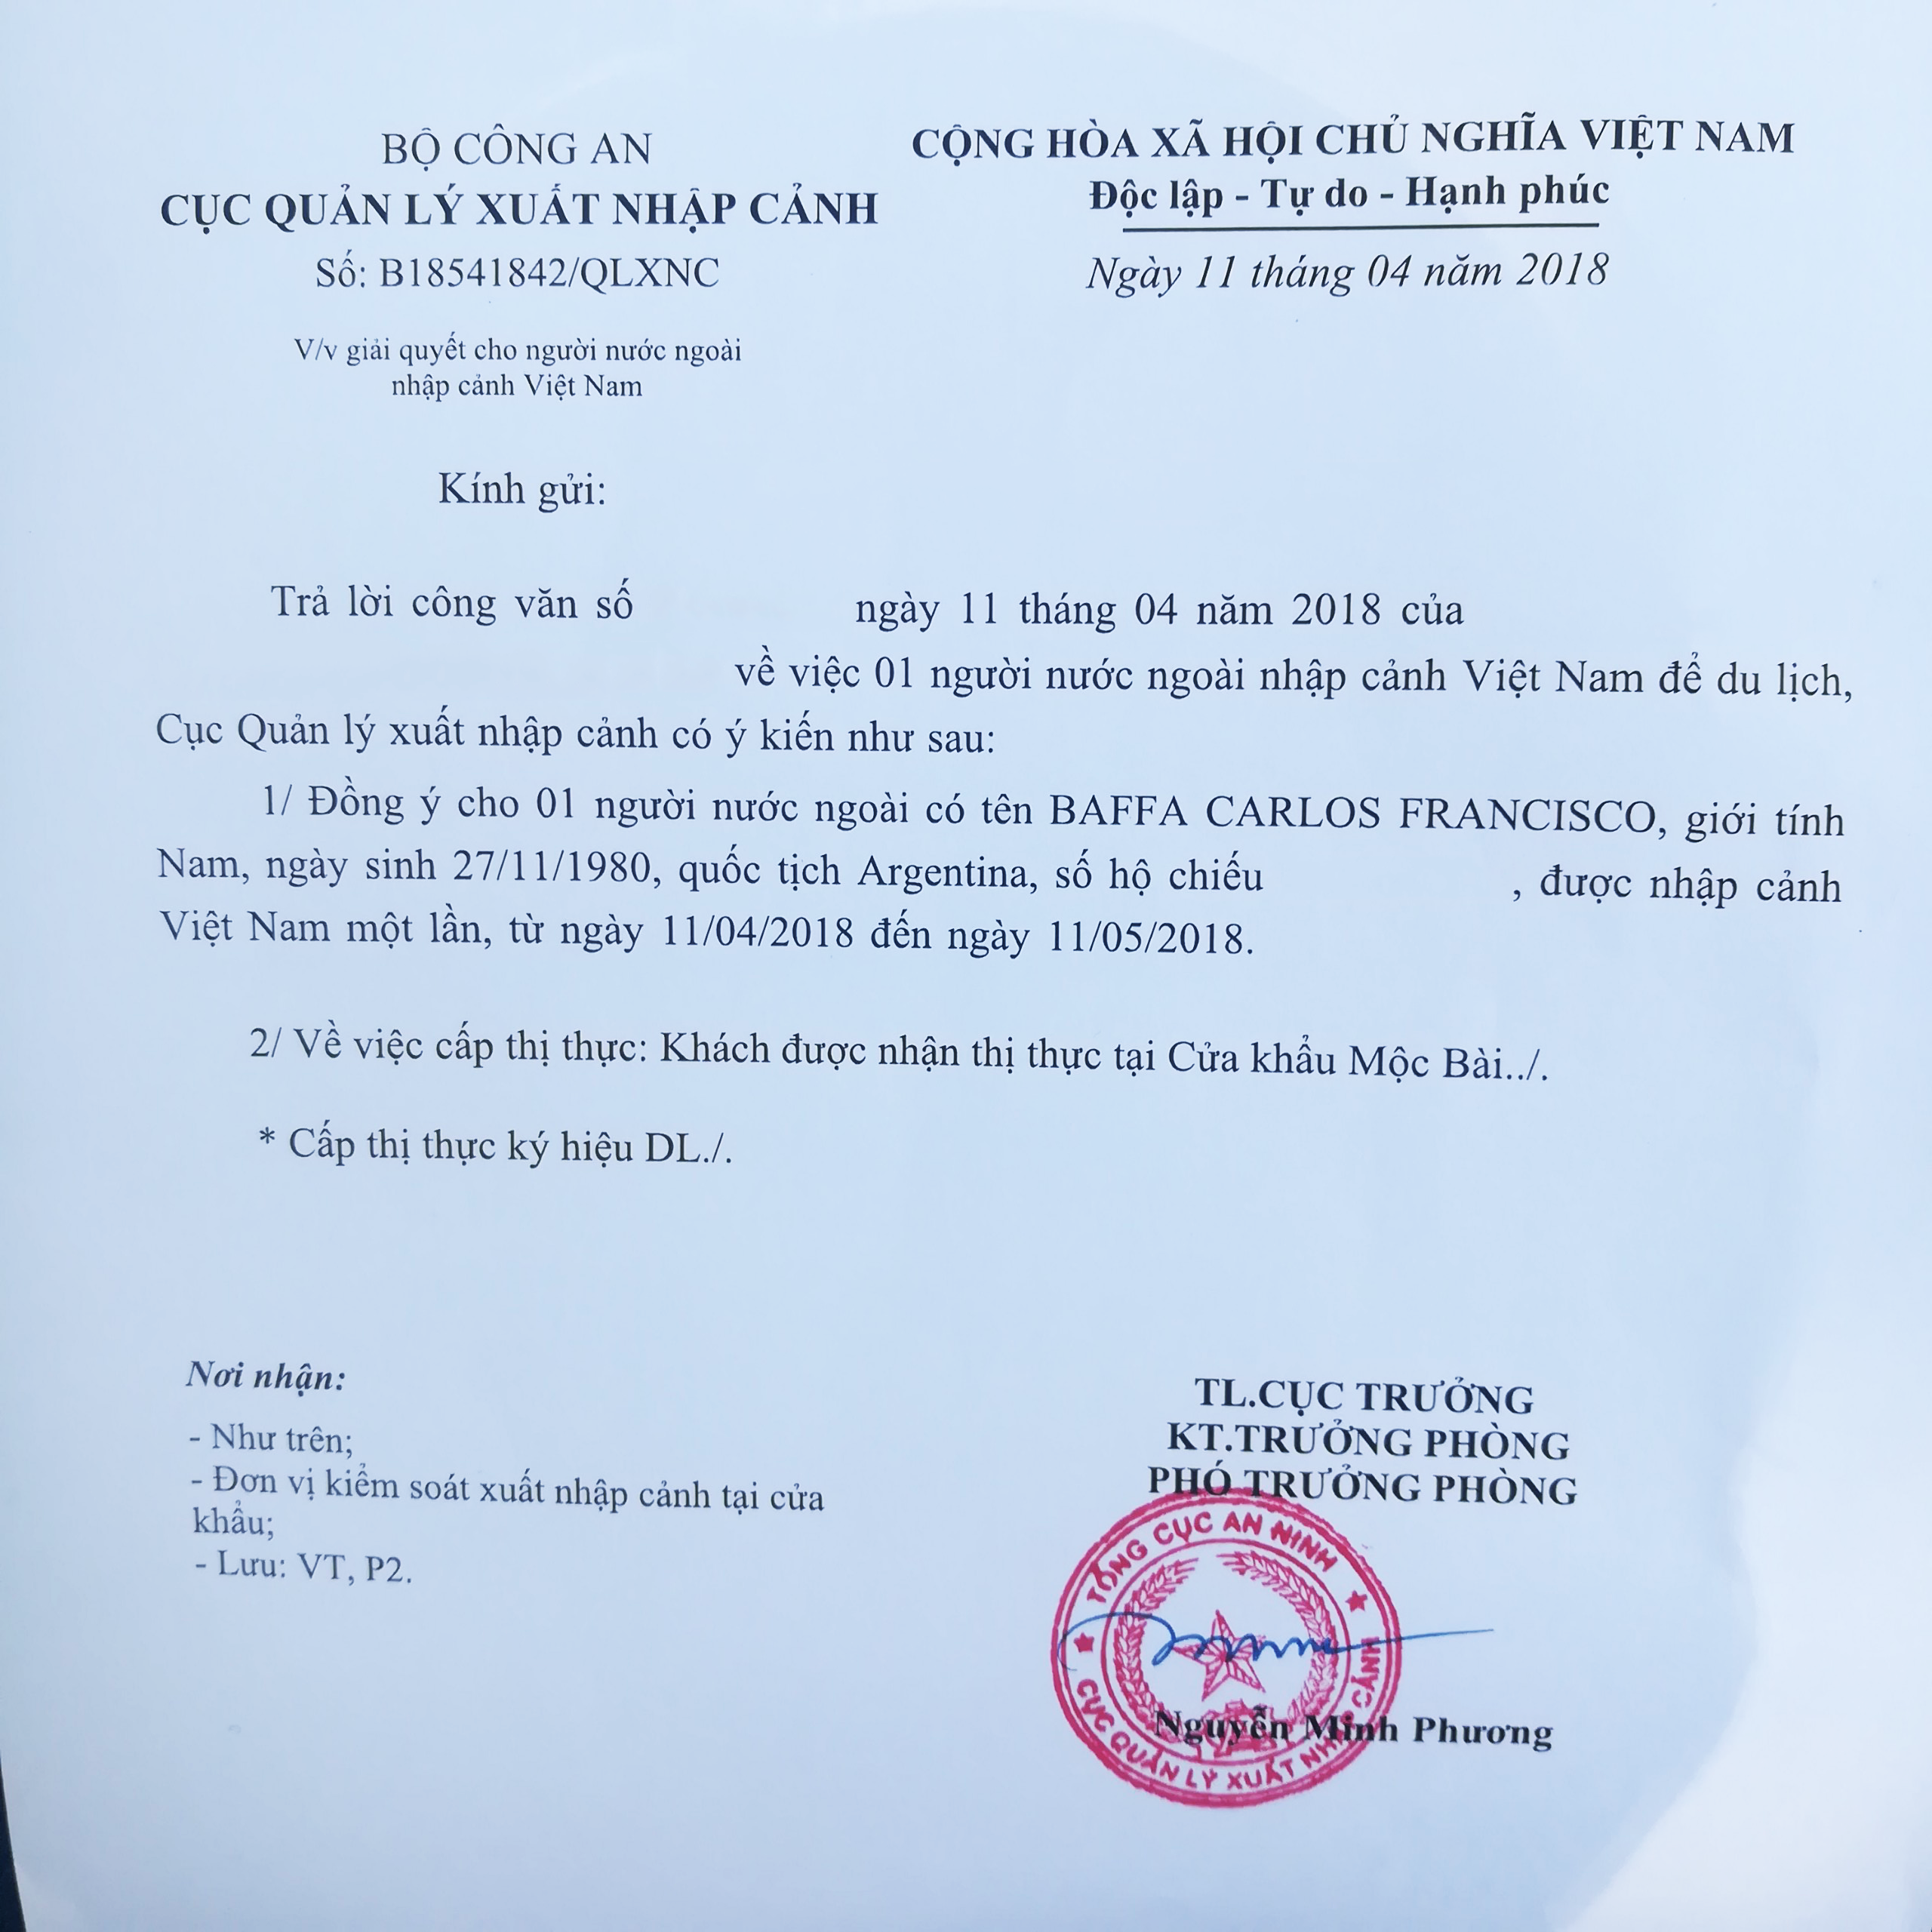 Private Vietnam visa on arrival